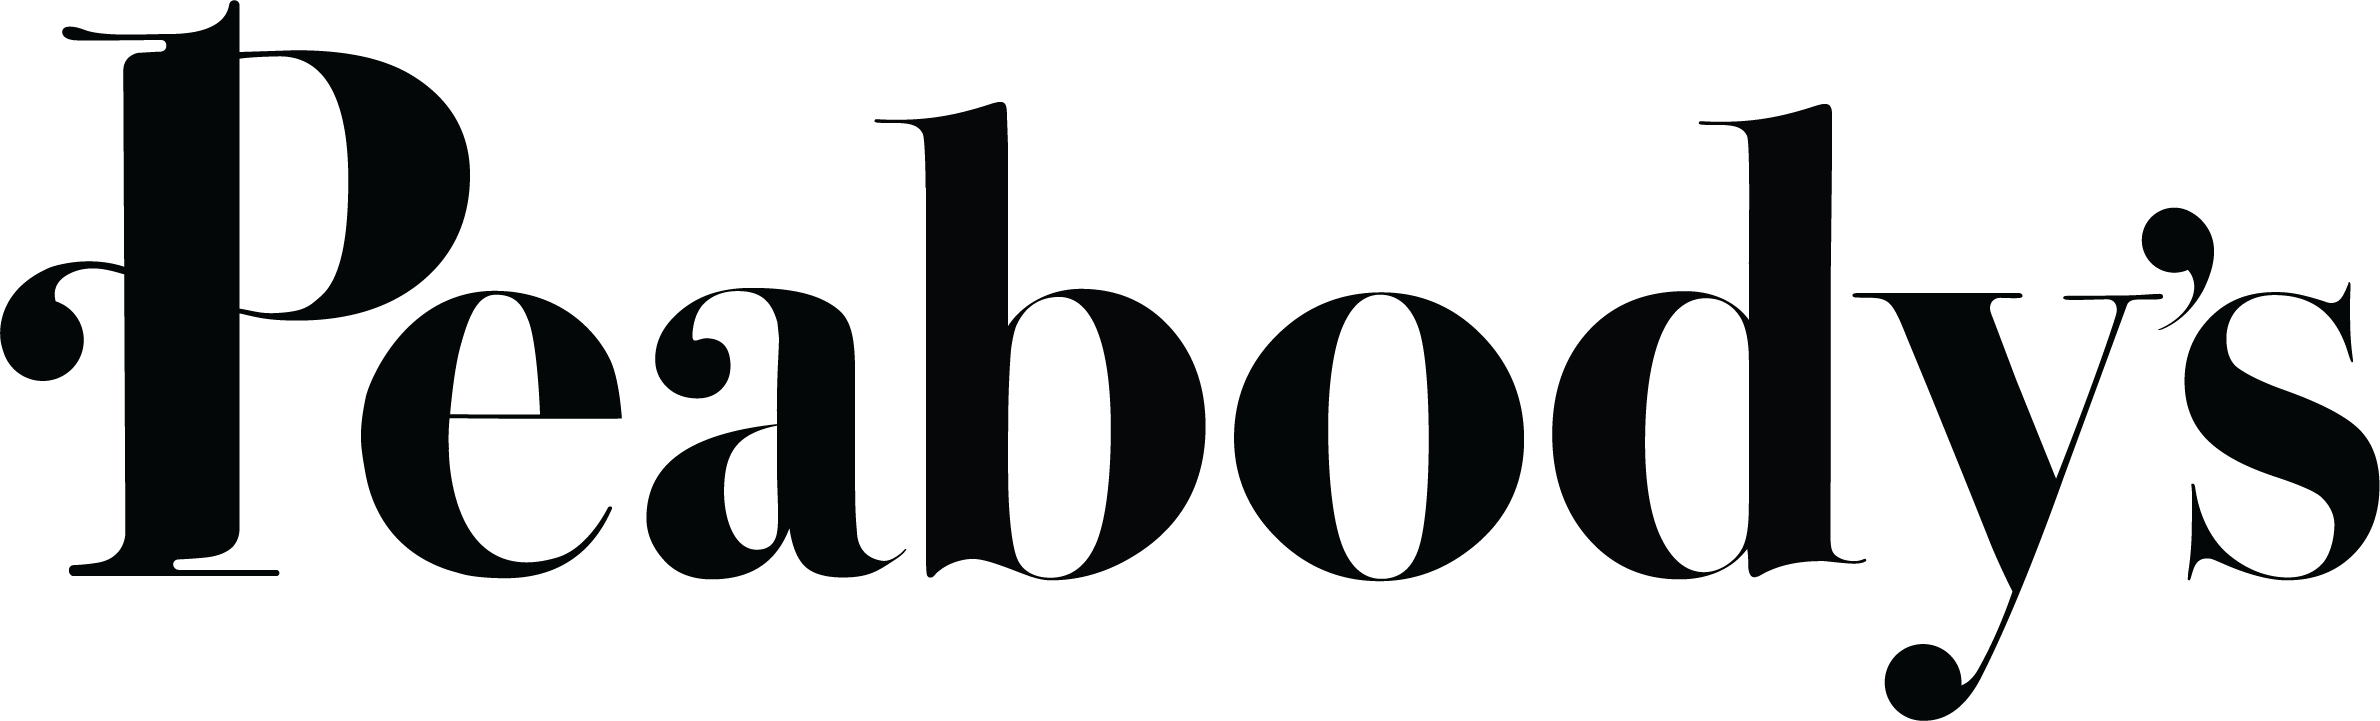 Peabody's Interiors logo